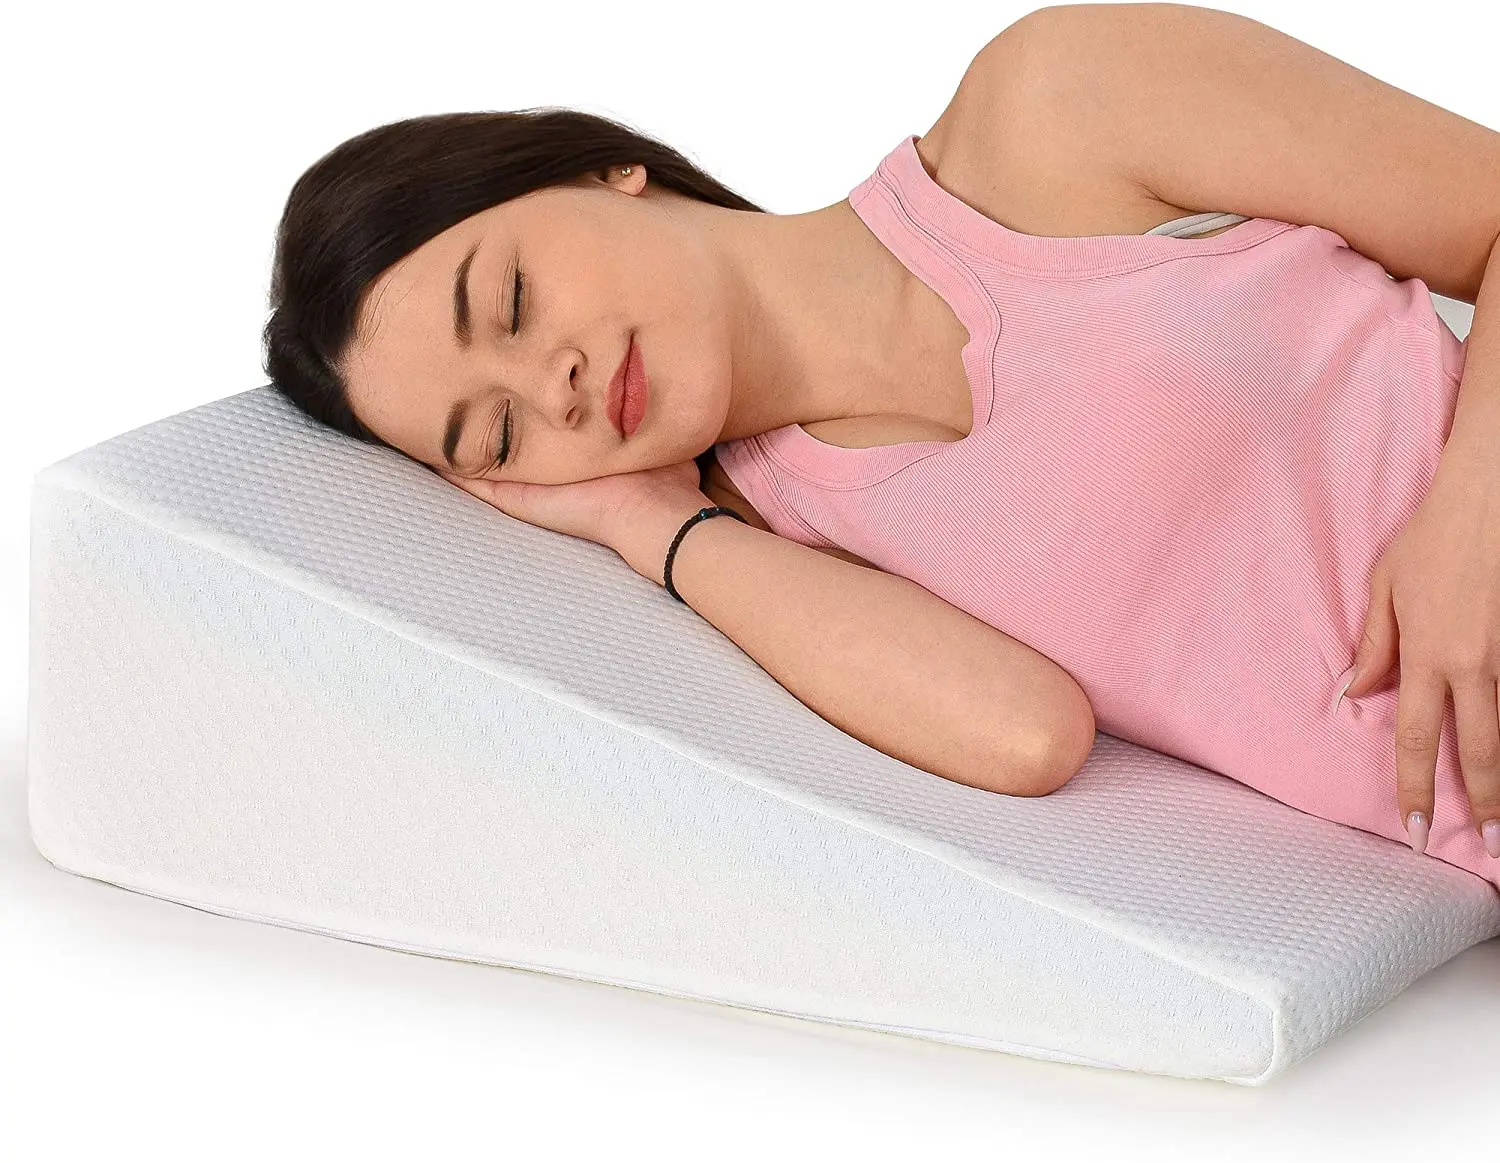 Babby cotton sleeping pillow acid reflux pad melory foam wedge pillow 